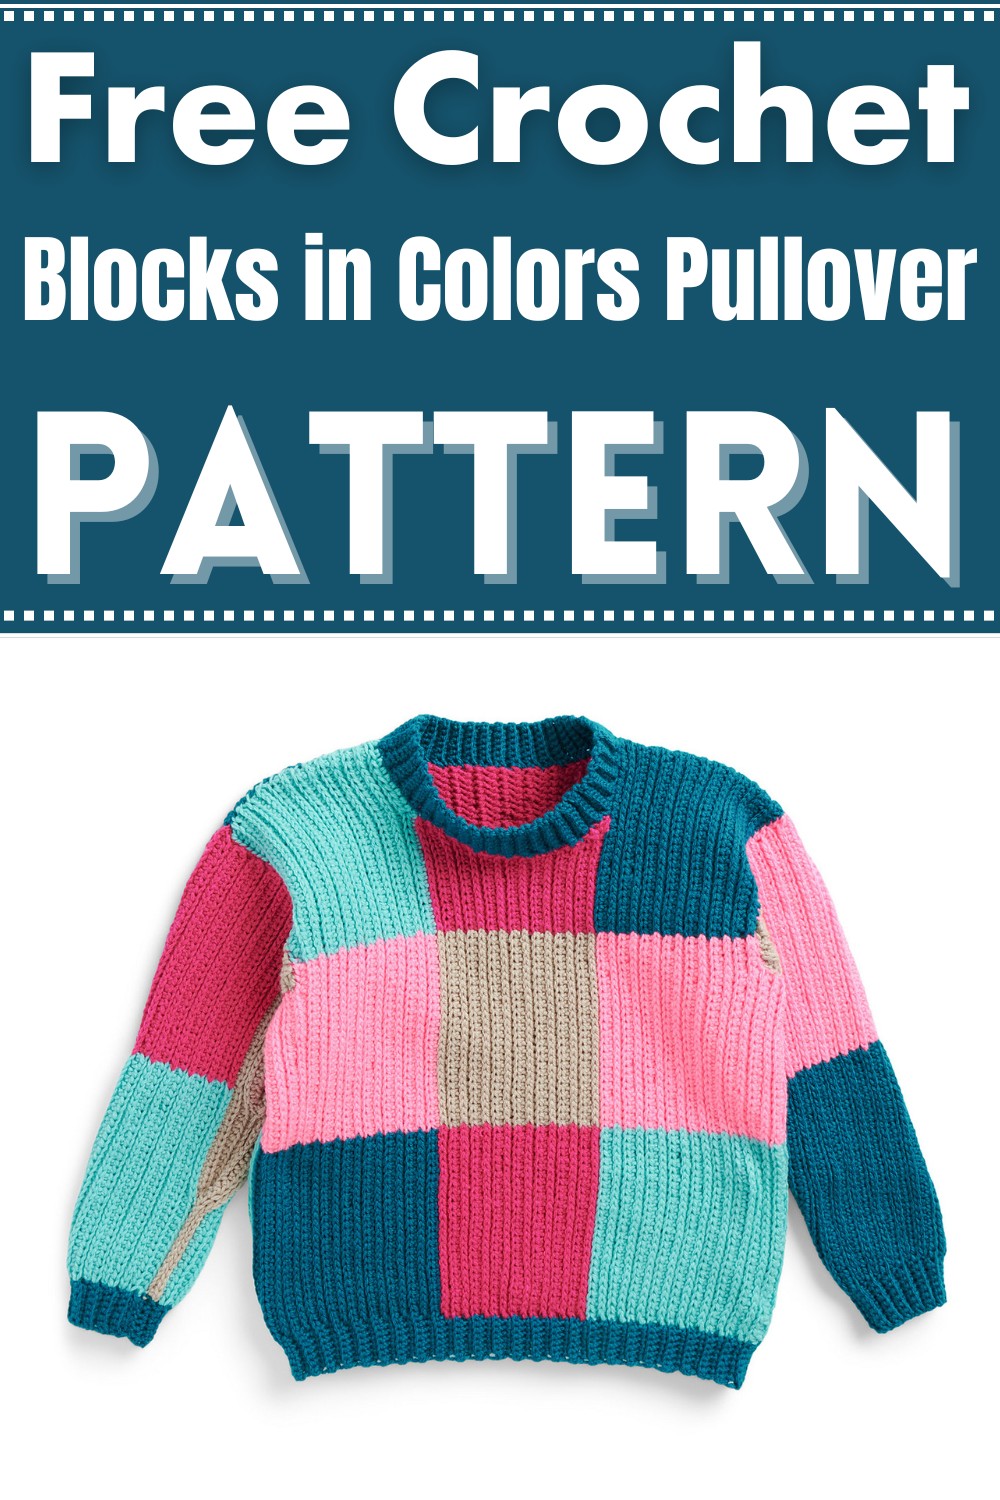 Crochet Blocks in Colors Pullover Pattern